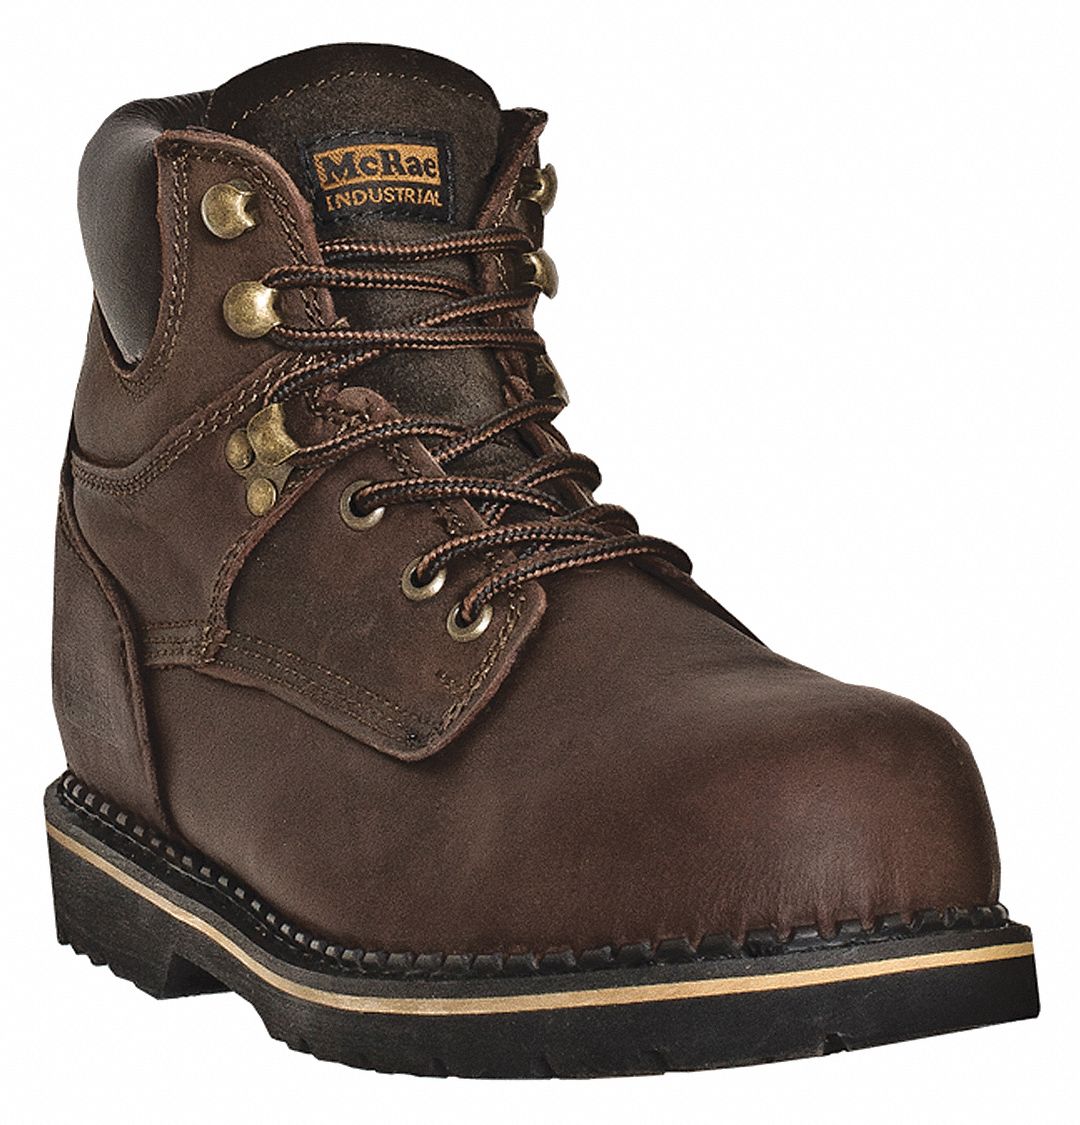 Work Boot: W, 14, 6 in Work Boot Footwear, 1 PR